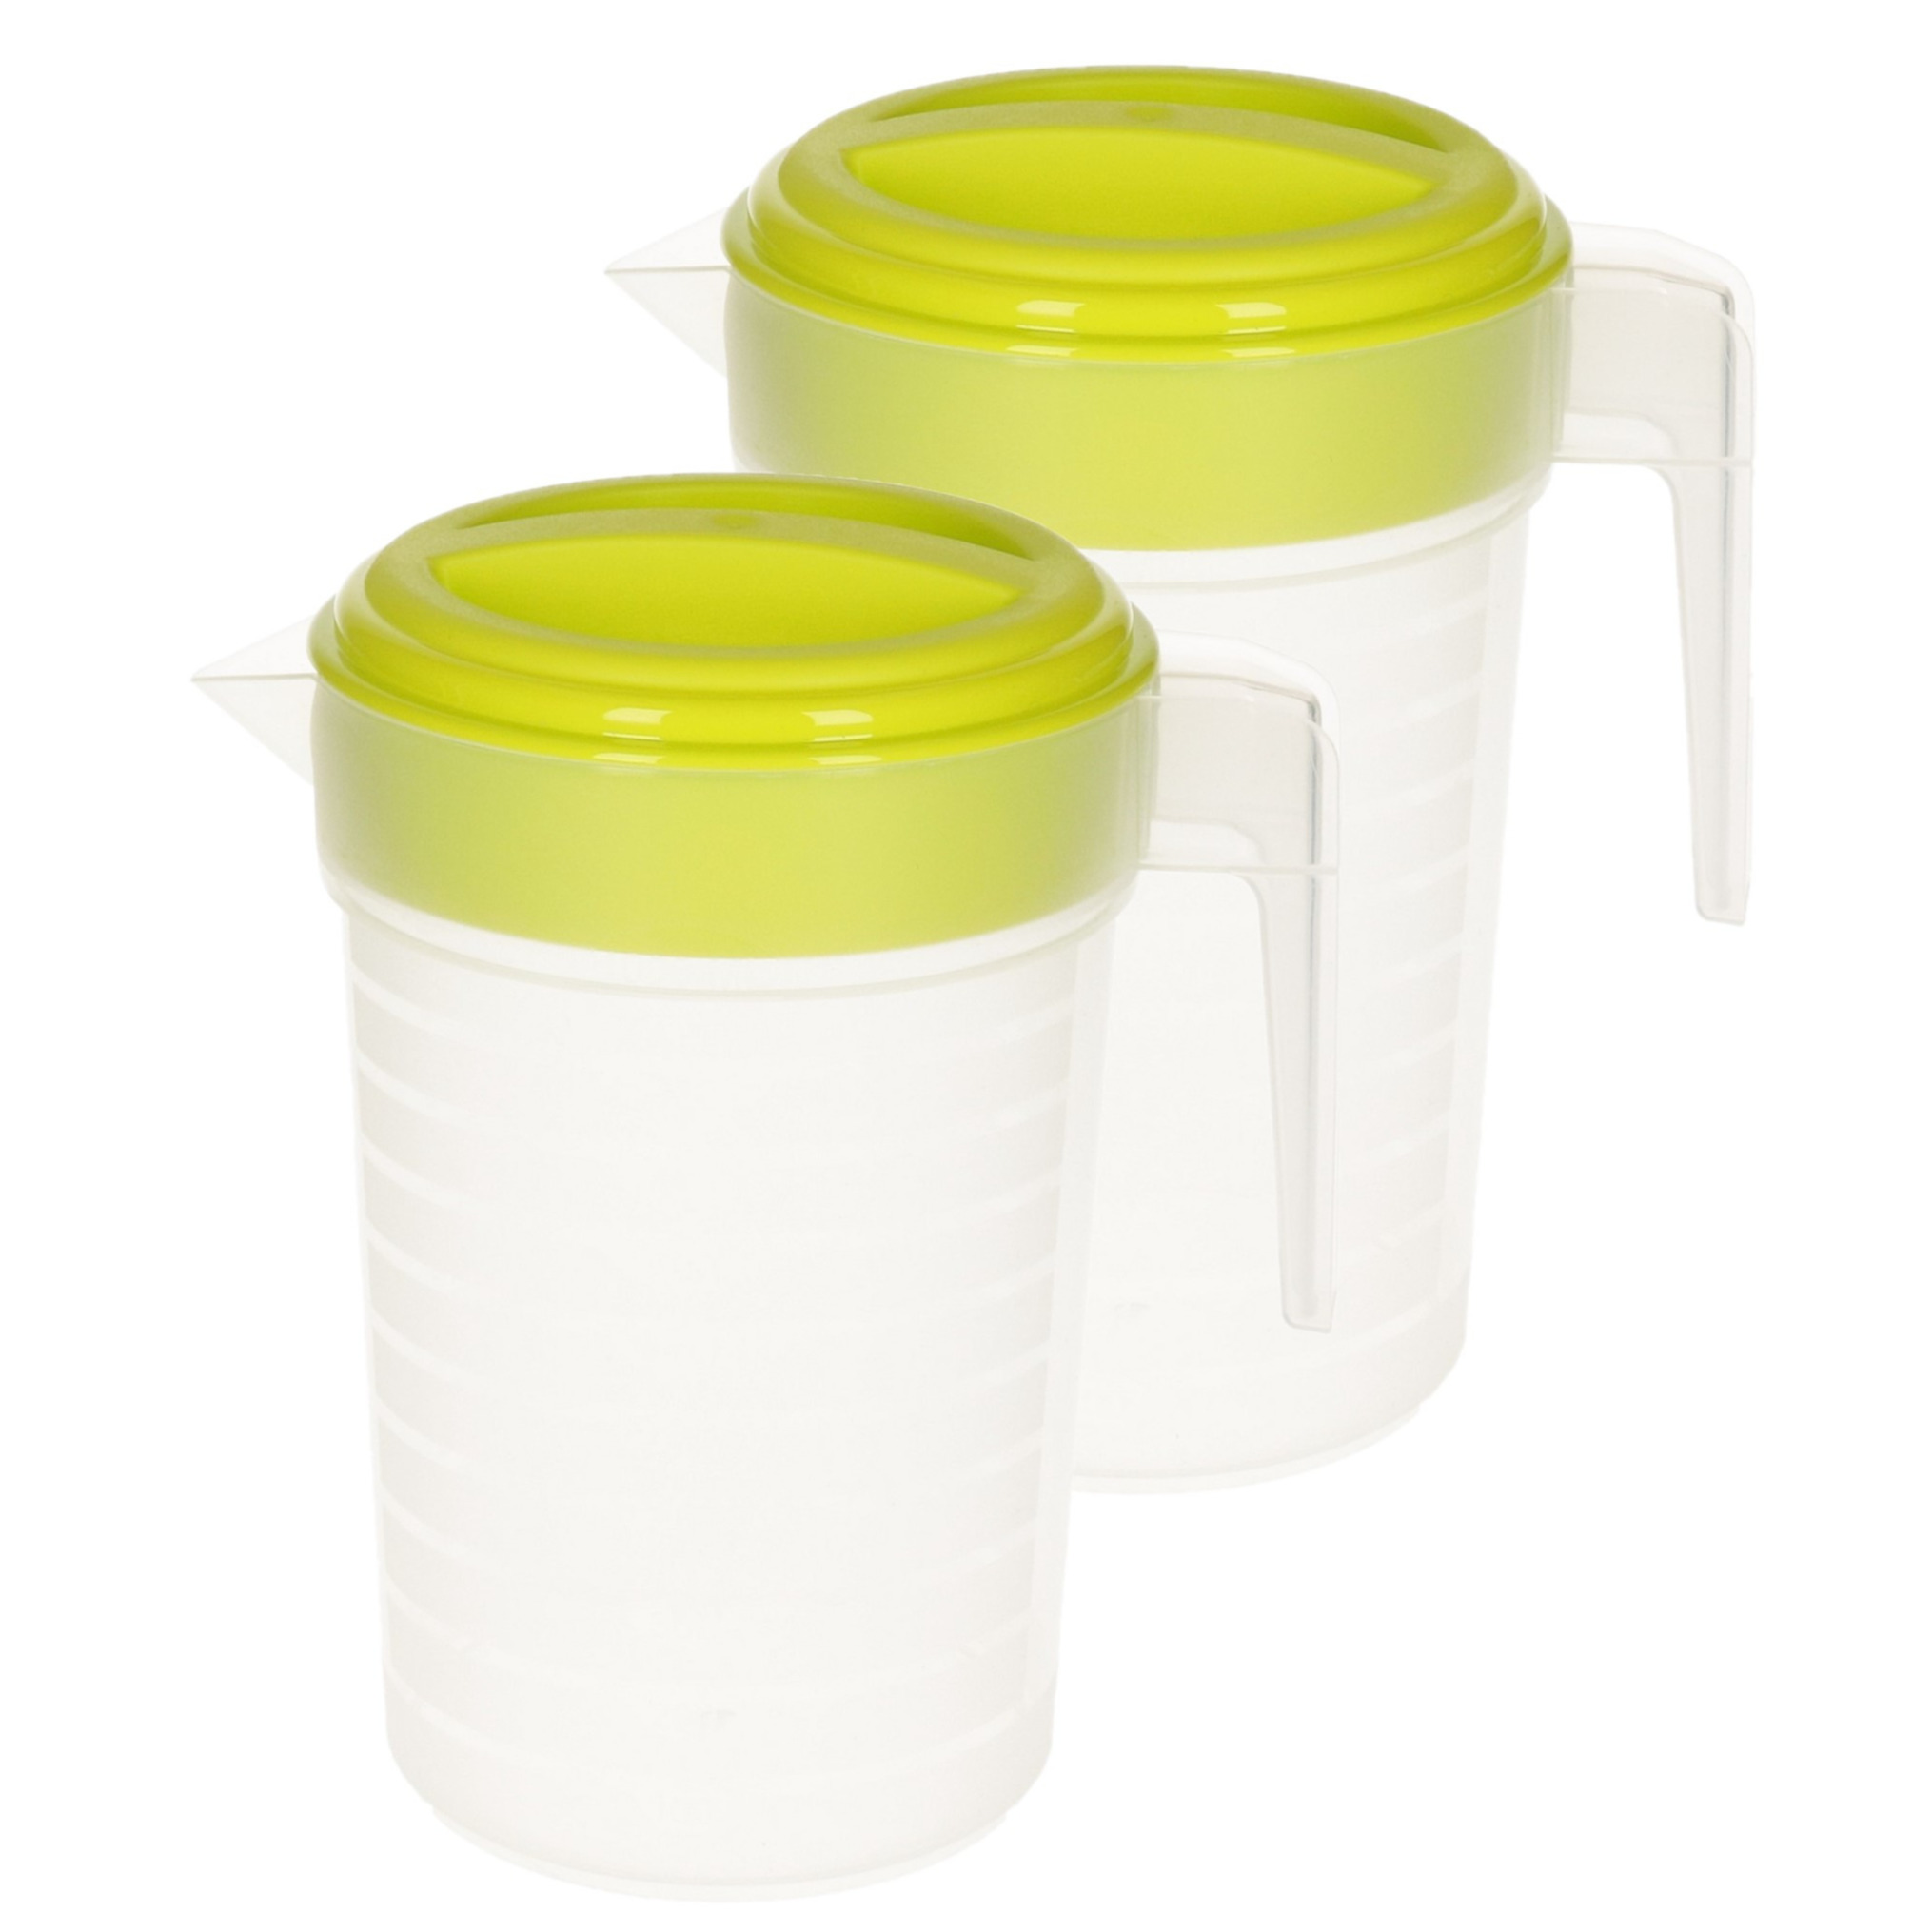 PlasticForte 2x stuks waterkan/sapkan transparant/groen met deksel 1 liter kunststof -